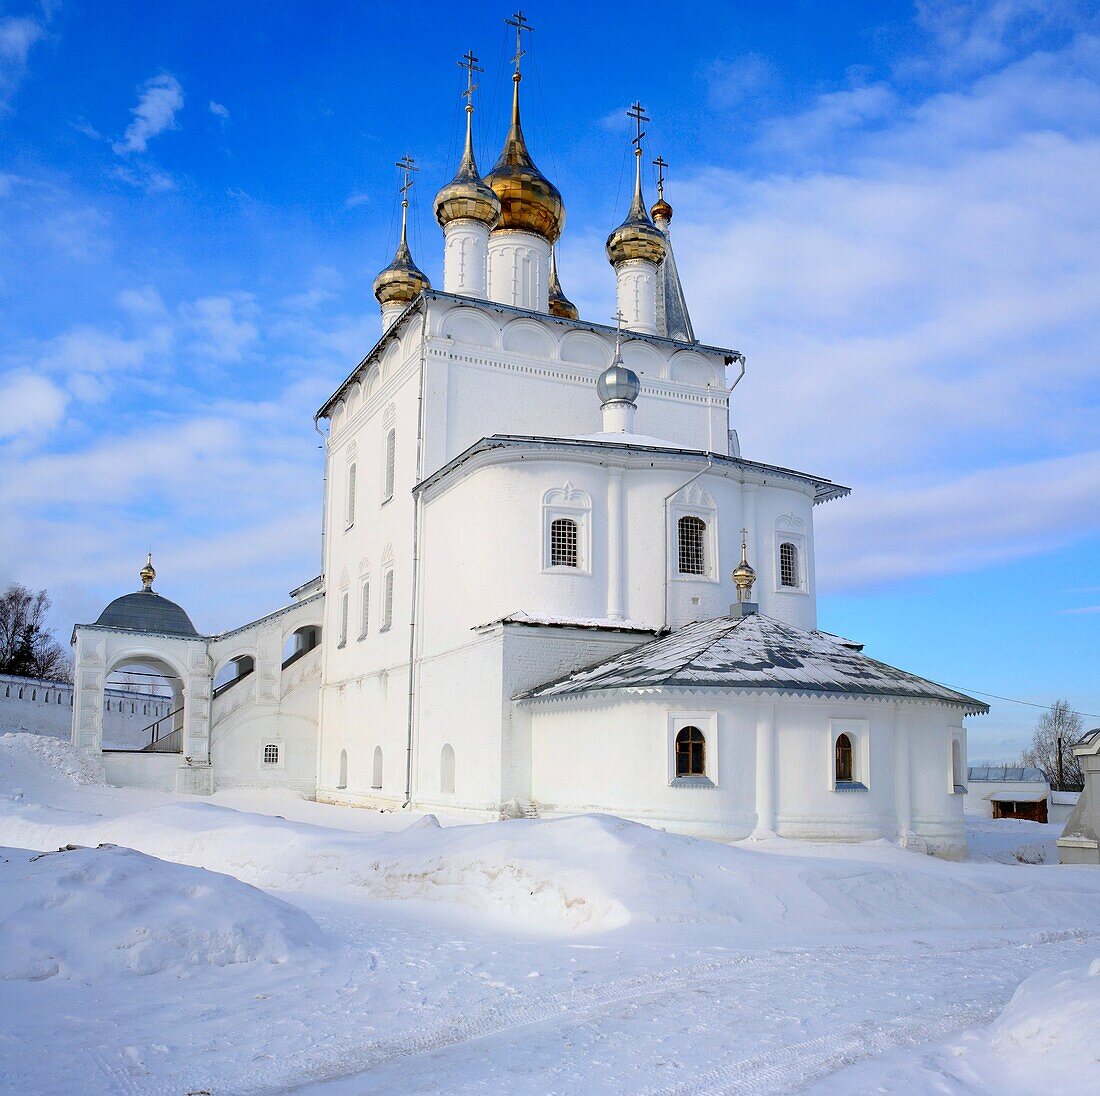 St Nicholas monastery, Gorohovets, Vladimir region, Russia